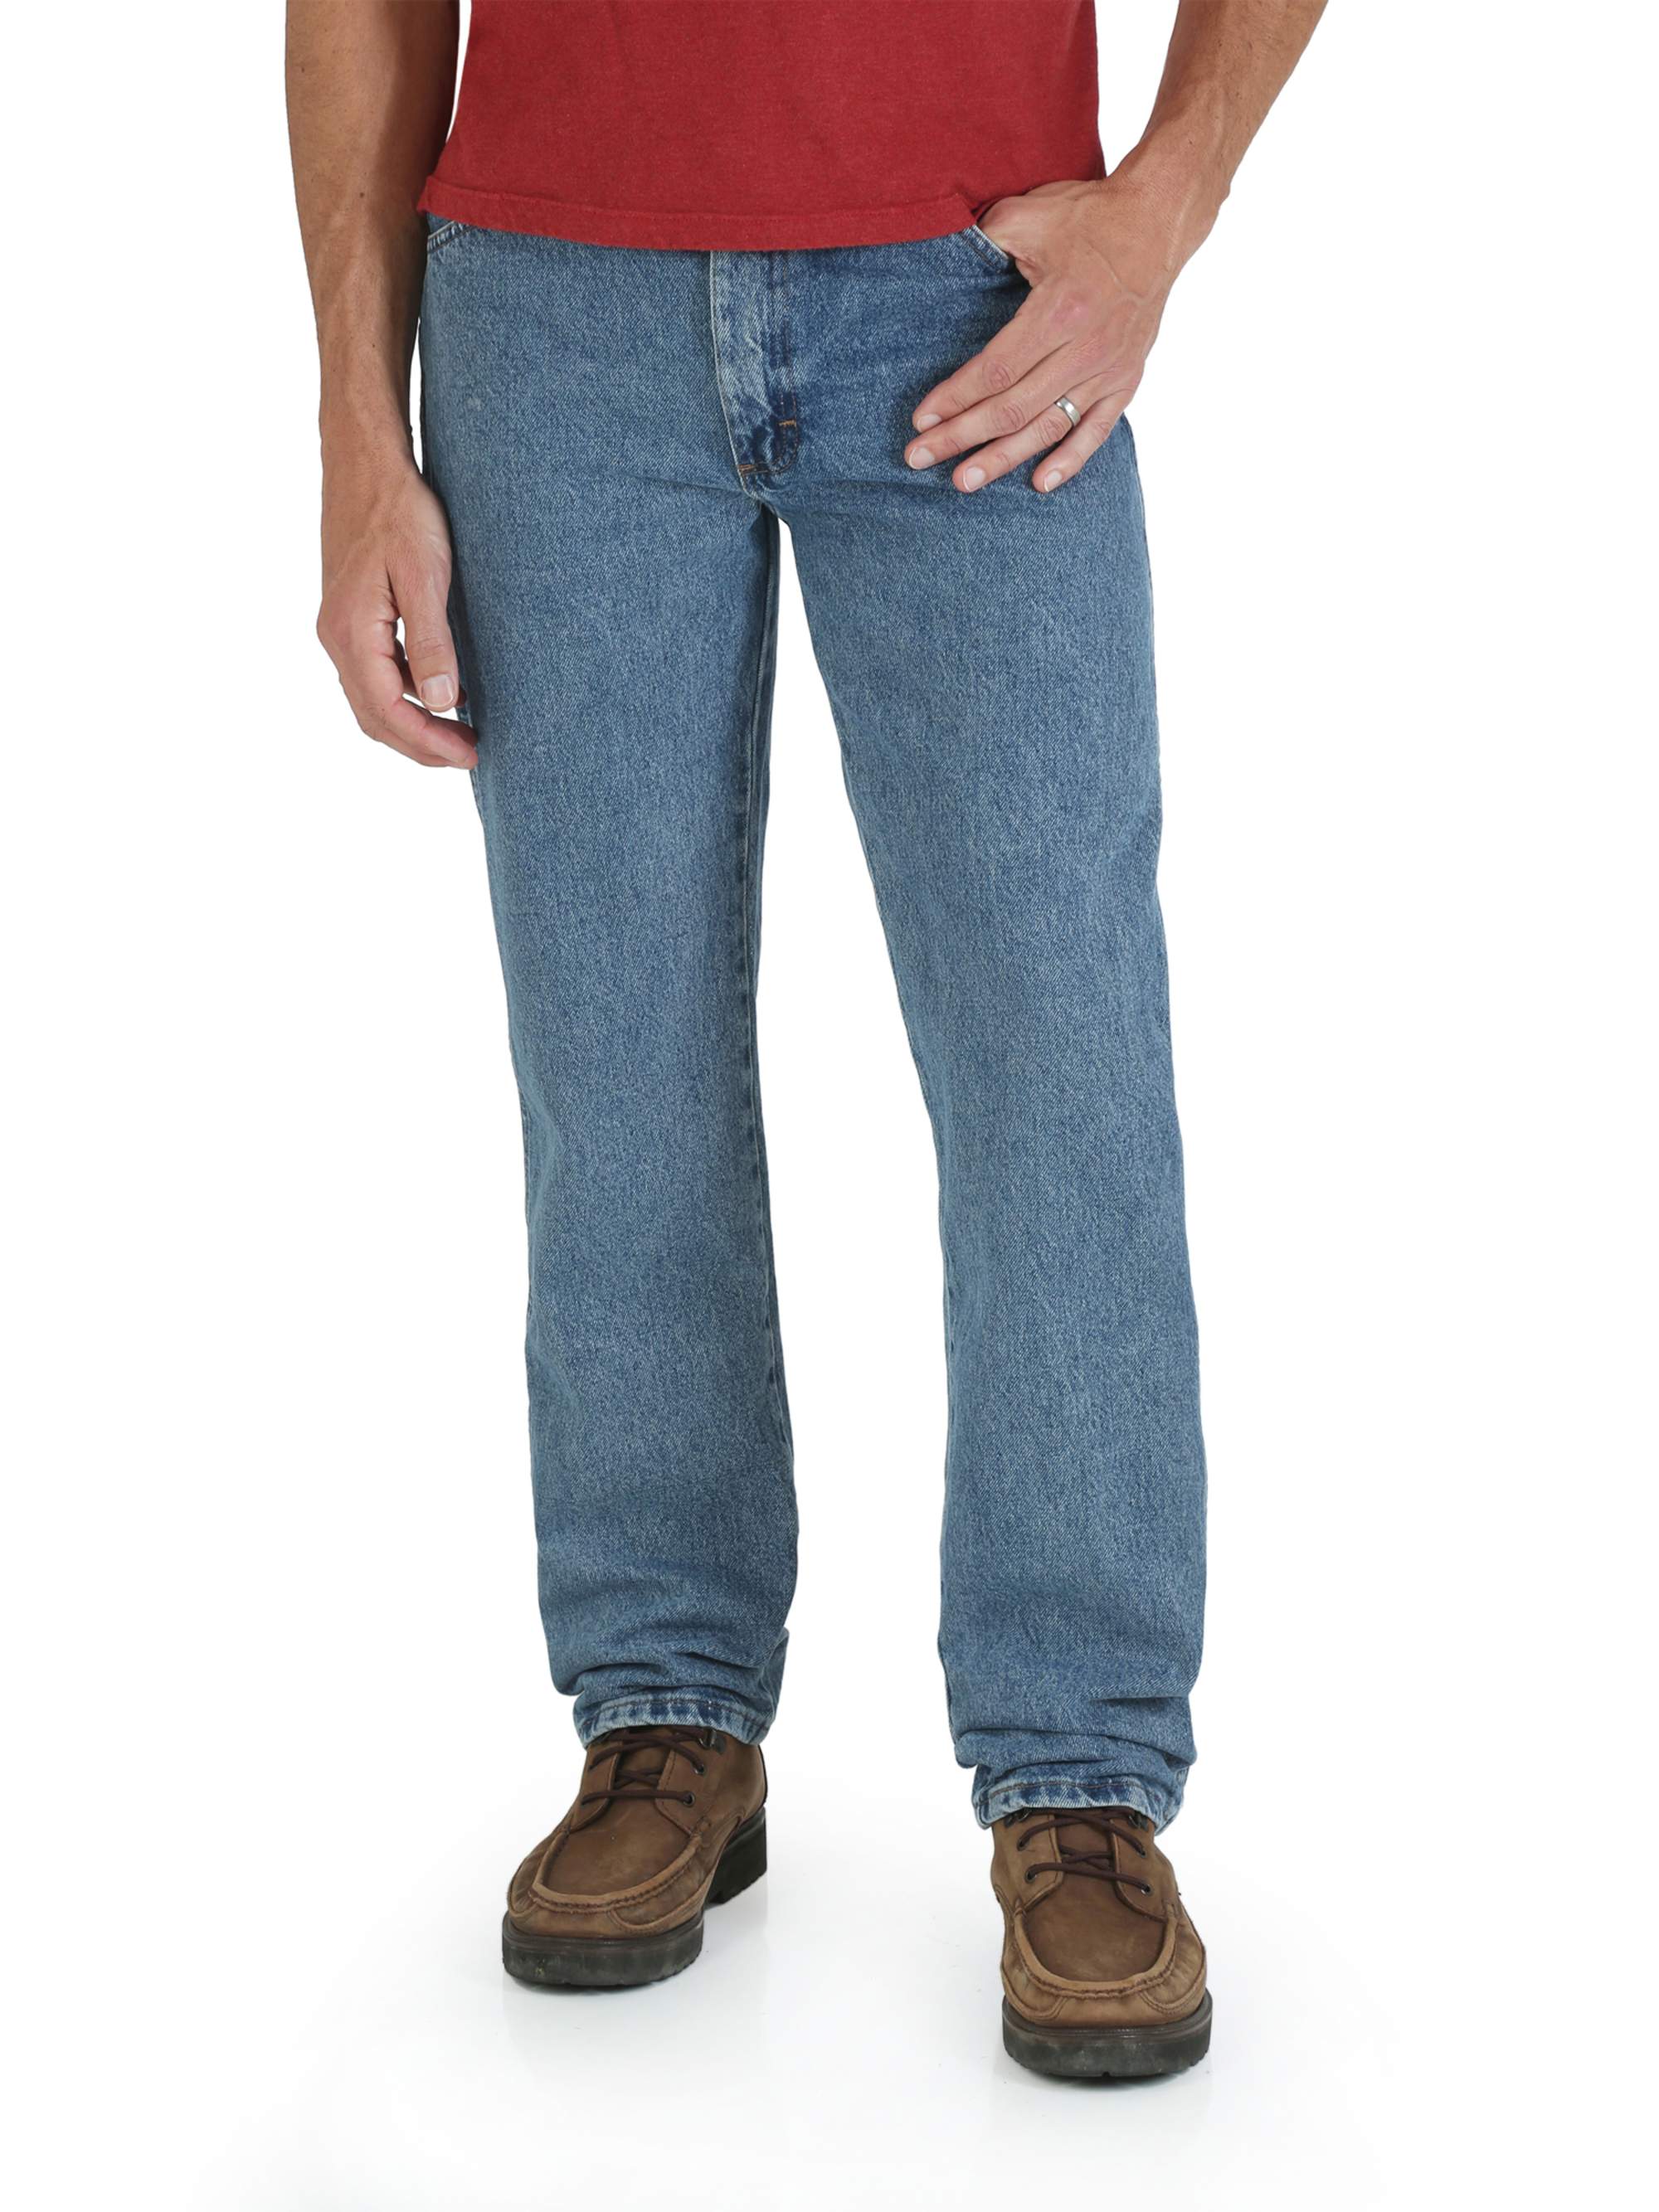 Wrangler Rustler Men's and Big Men's Regular Fit Jeans - image 1 of 5